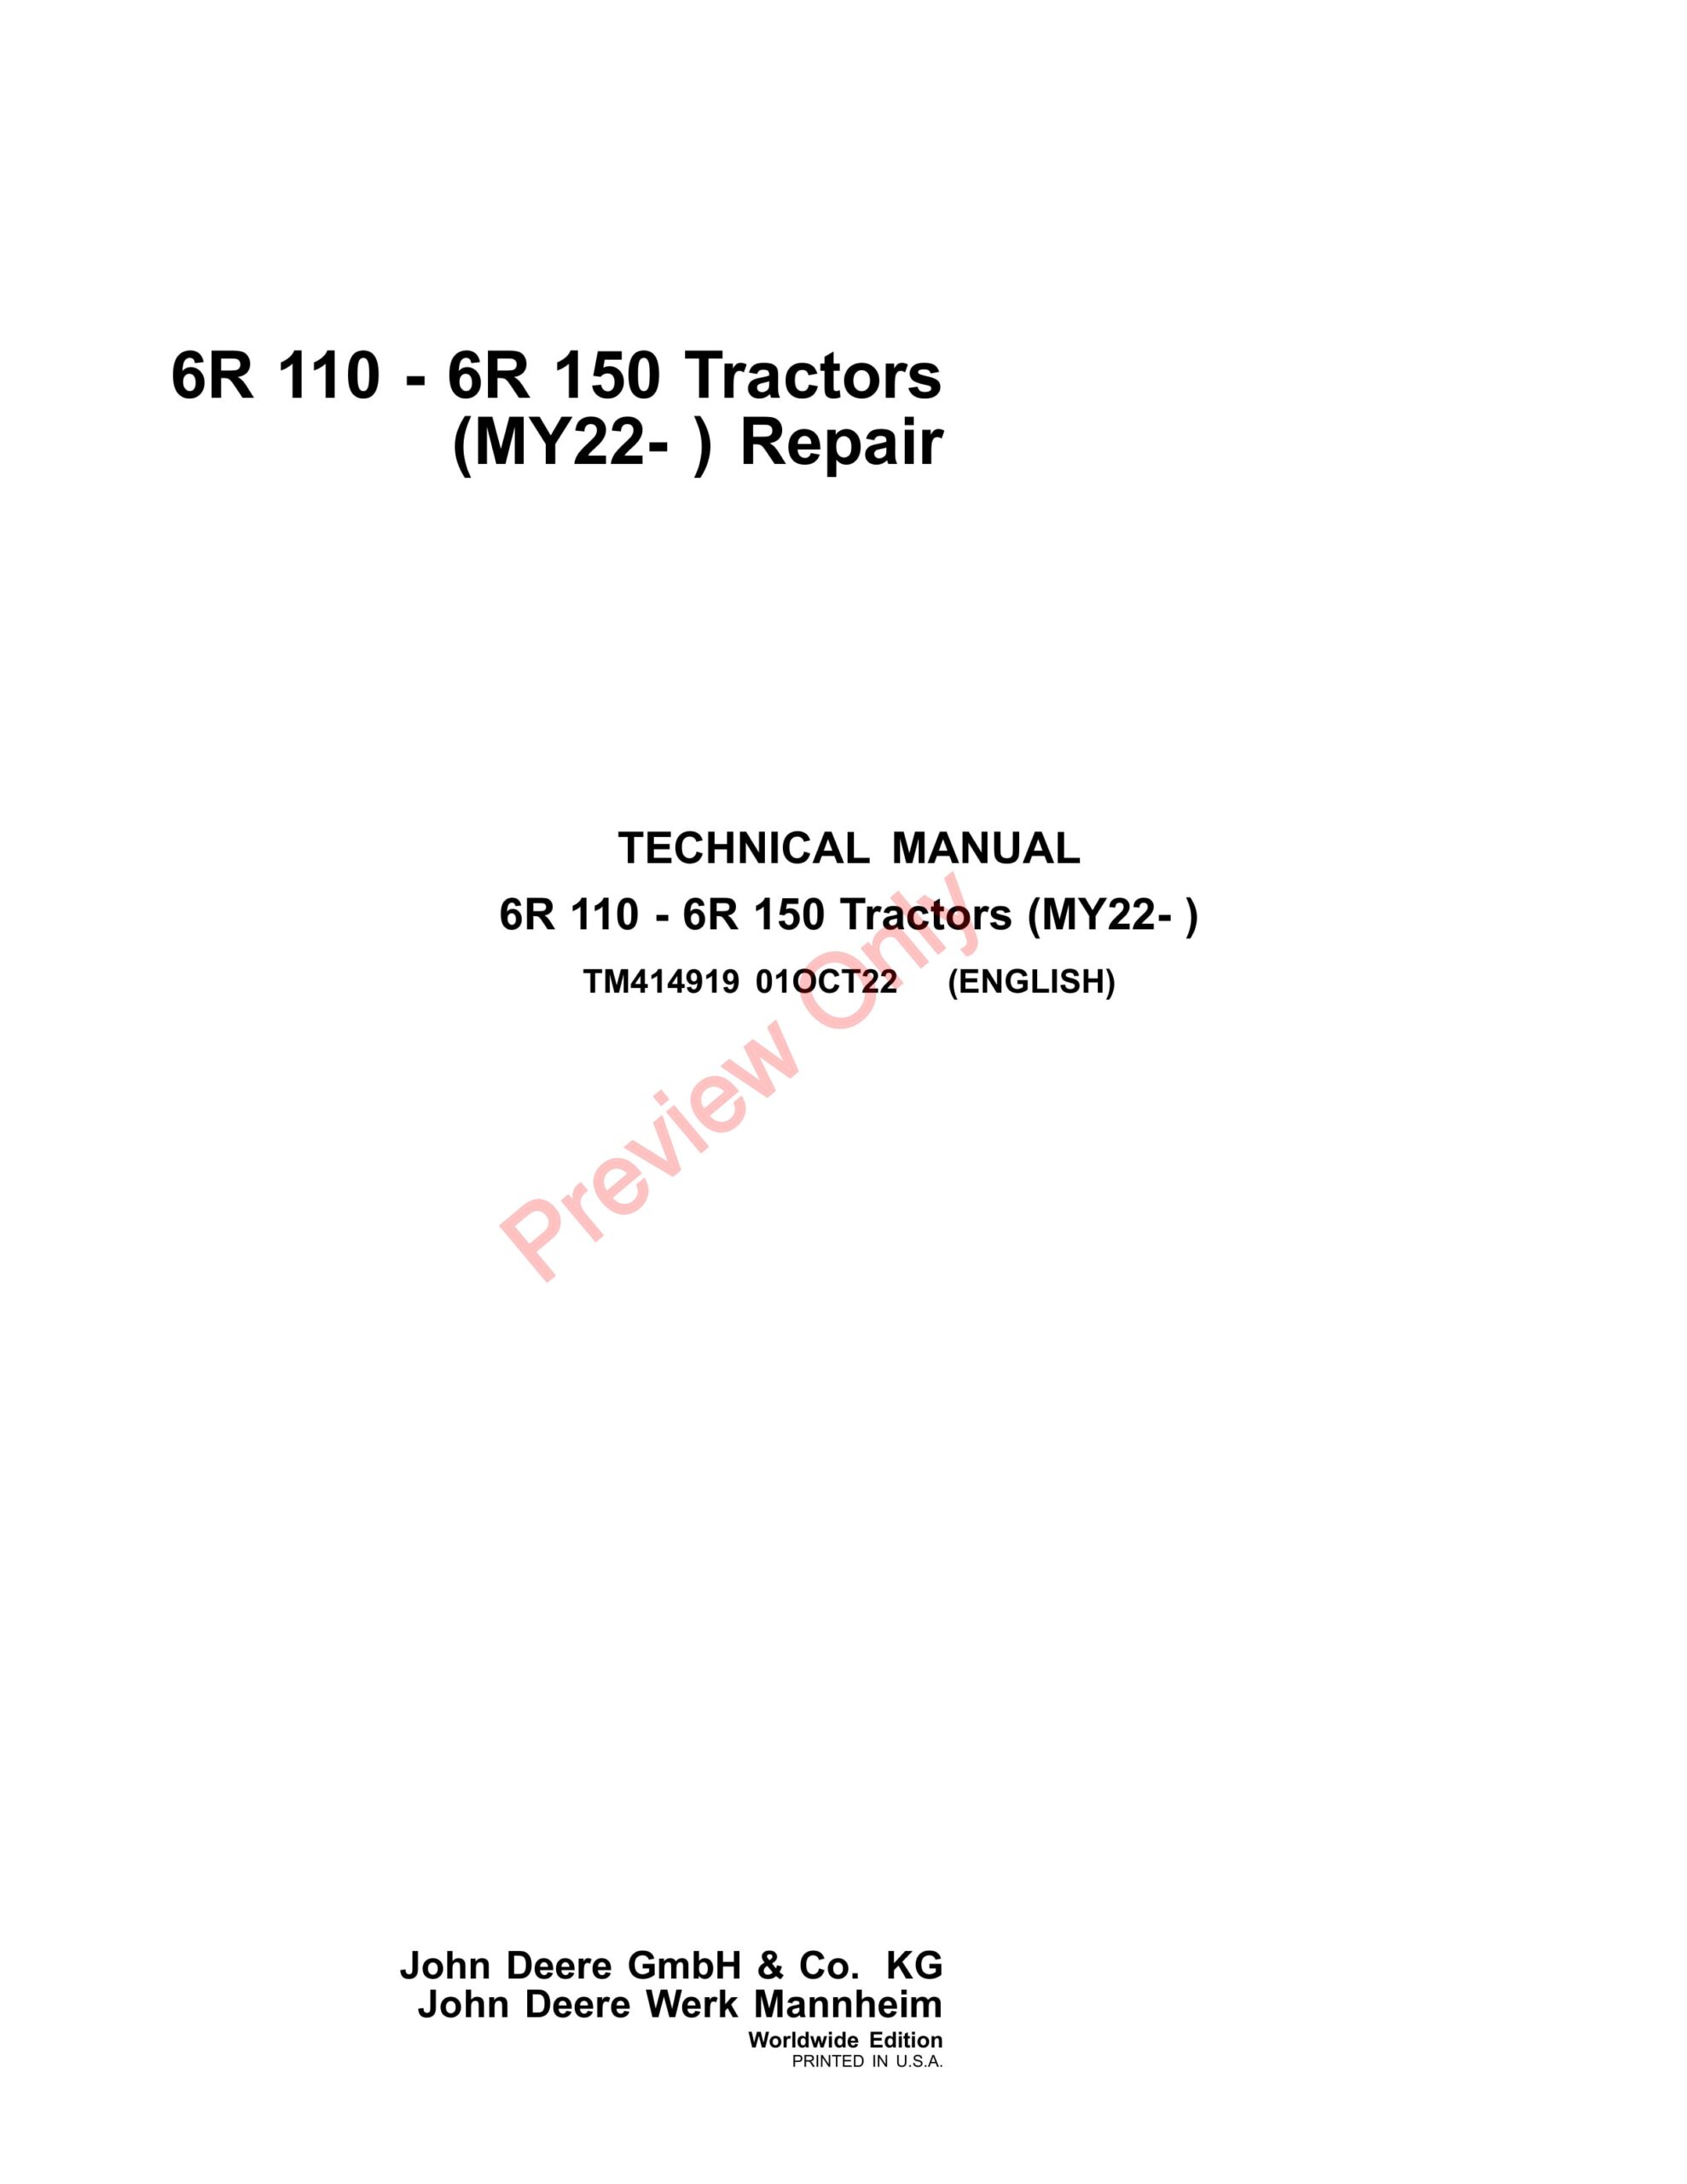 John Deere 6R 110 – 6R 150 Tractors (MY22- ) Technical Manual TM414919 01MAR23-1